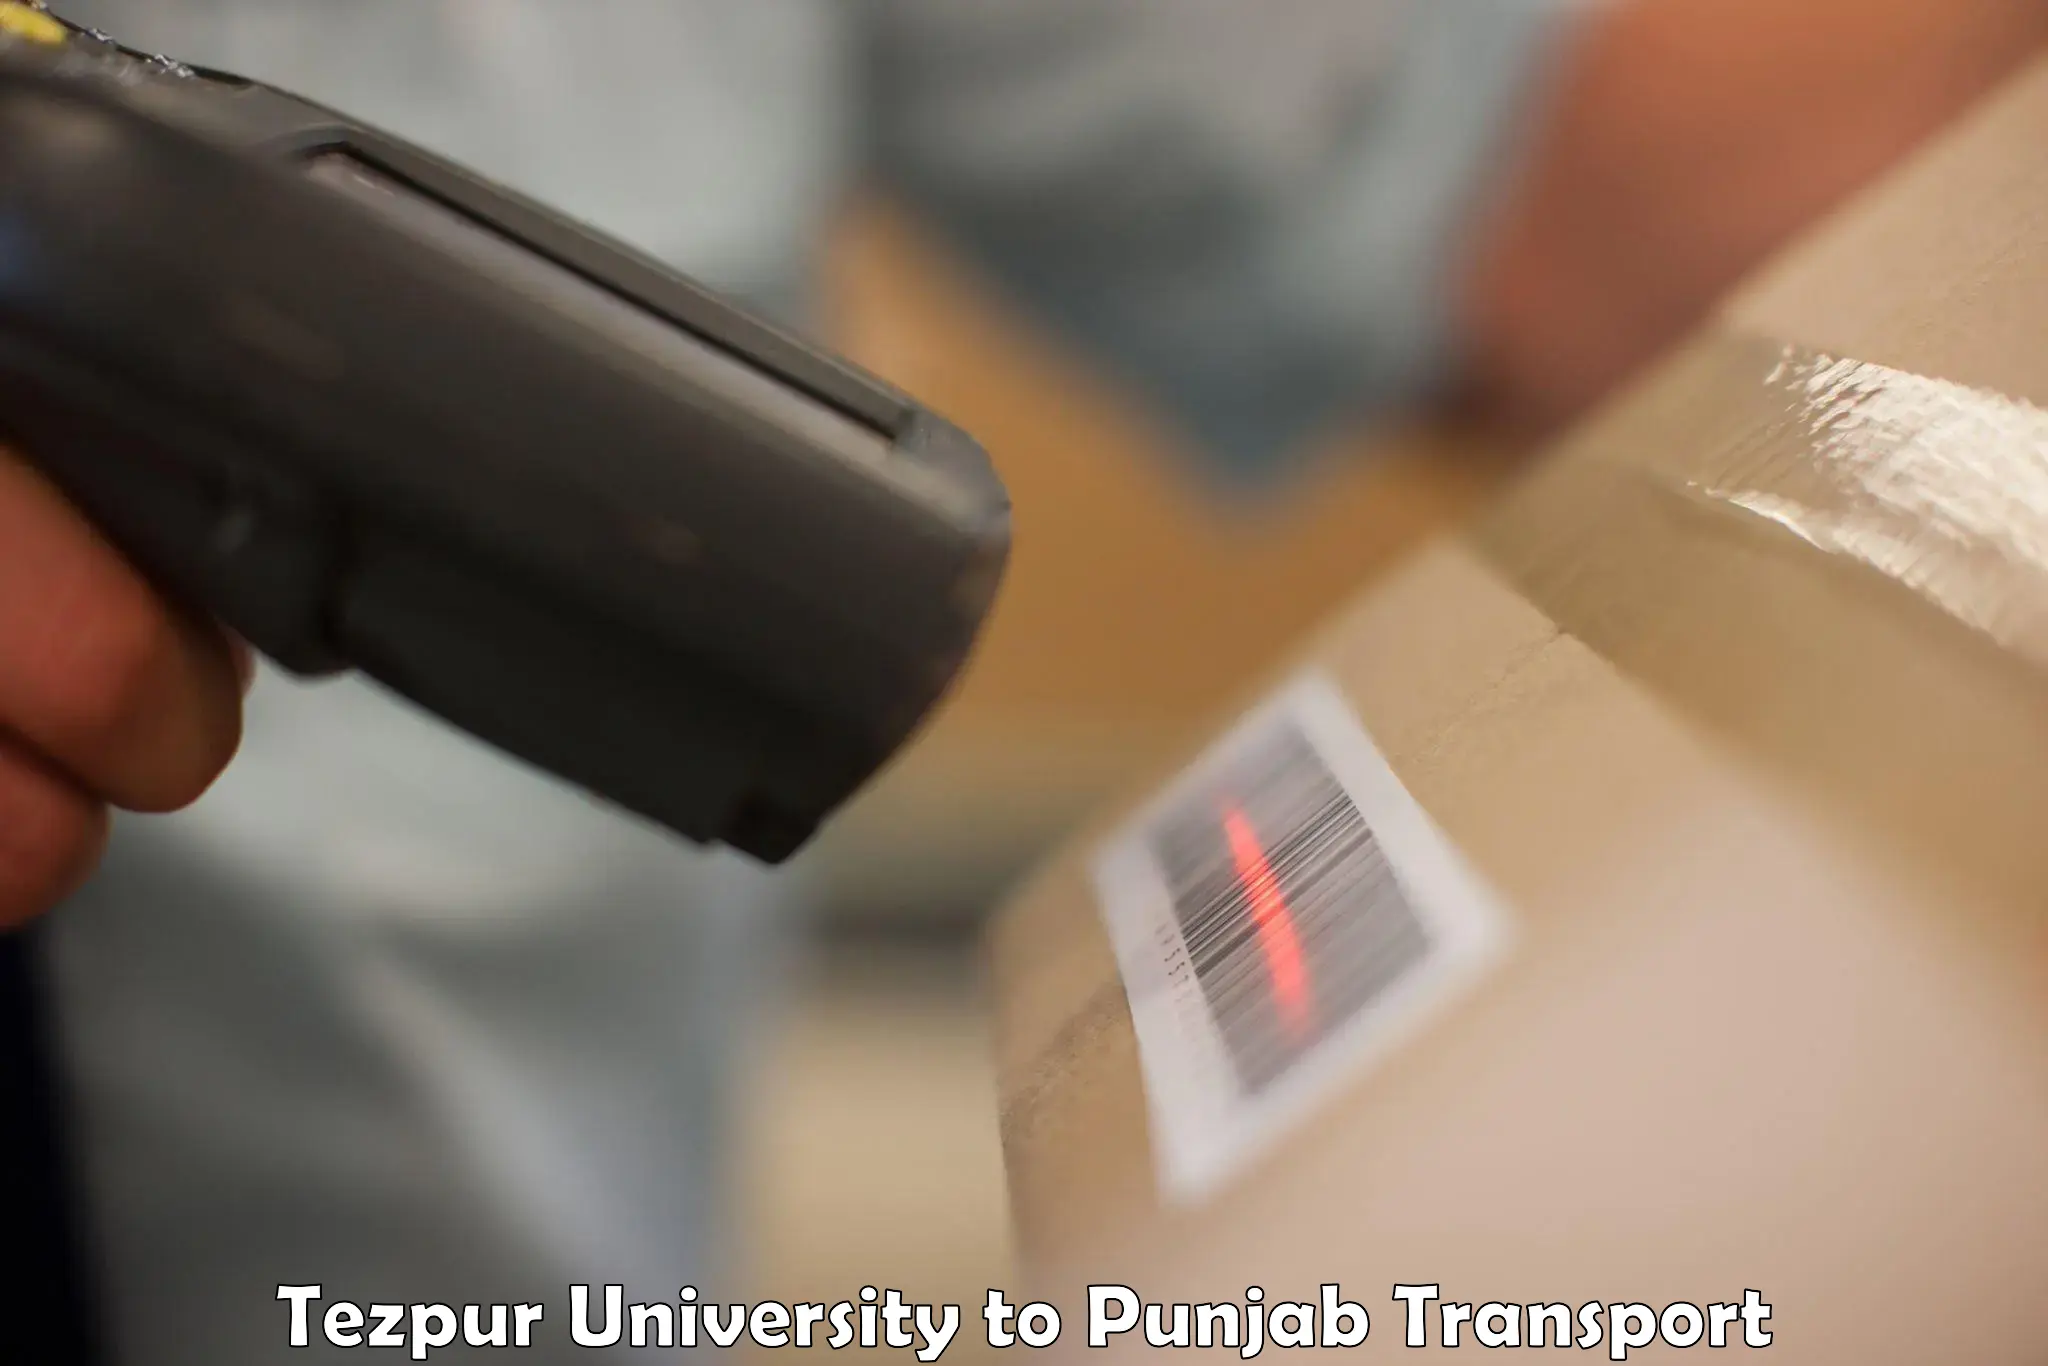 Lorry transport service Tezpur University to Patiala